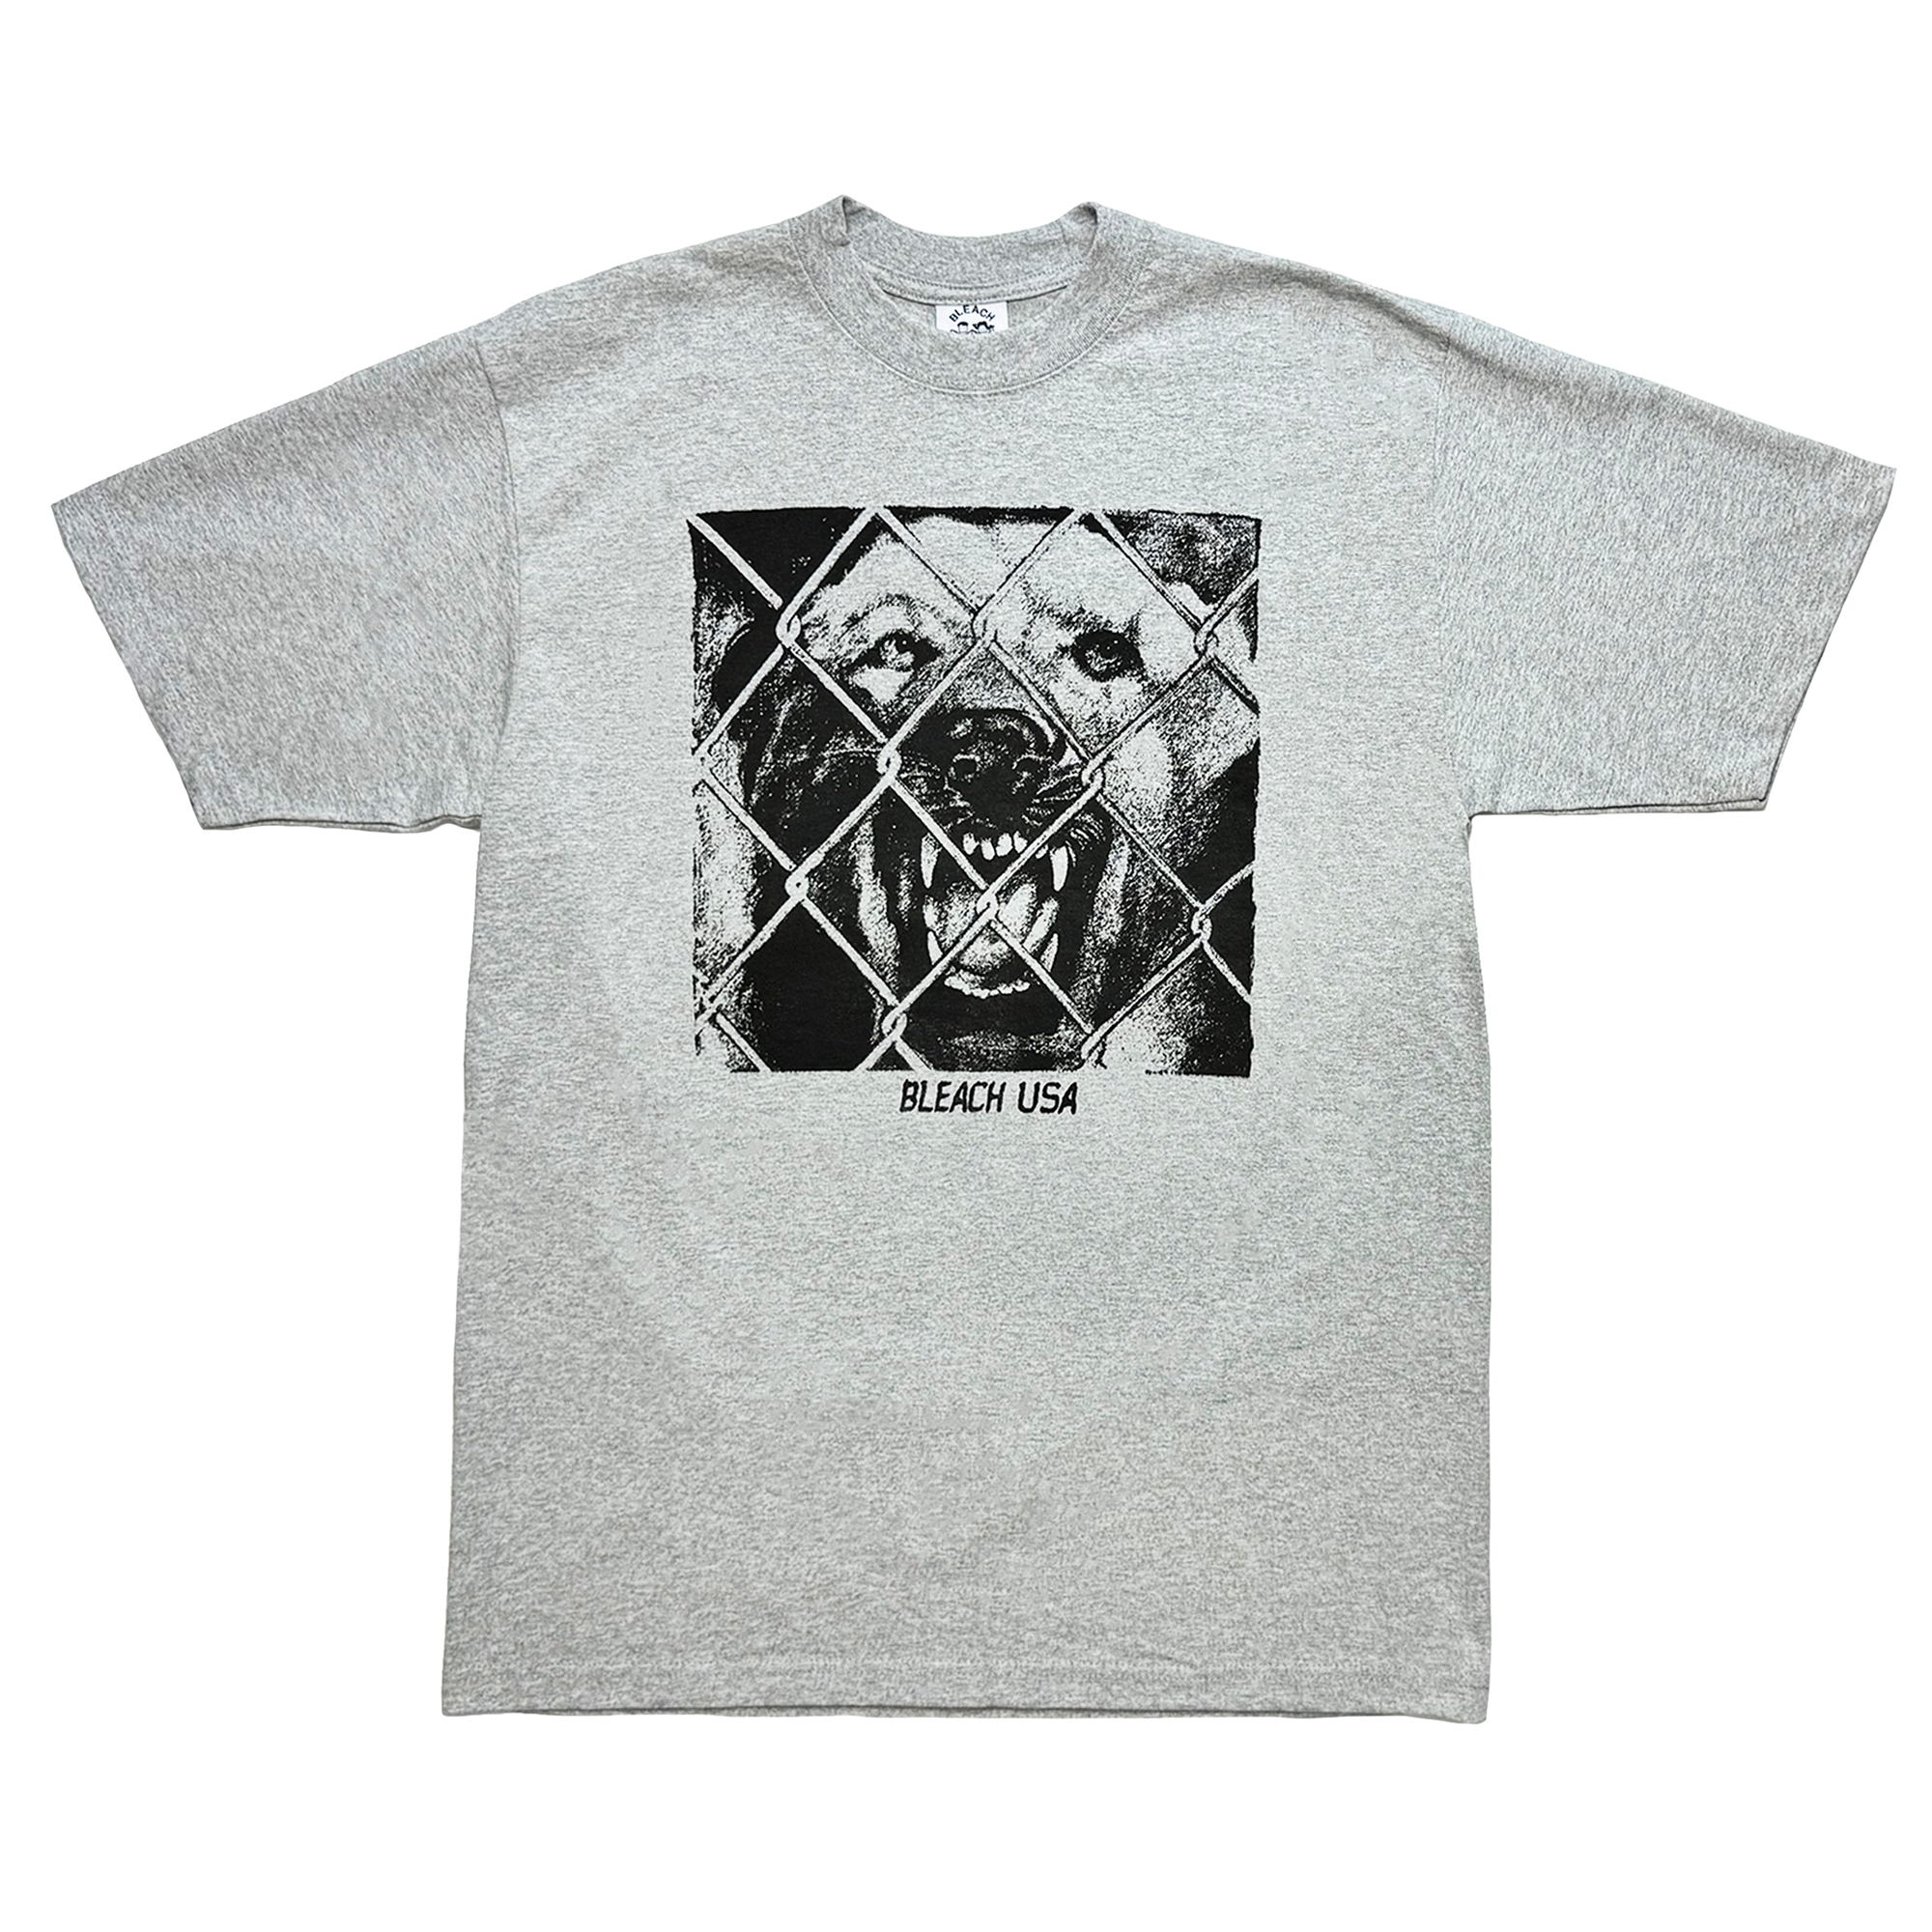 Bleach USA Eat Dog Shirt - Grey